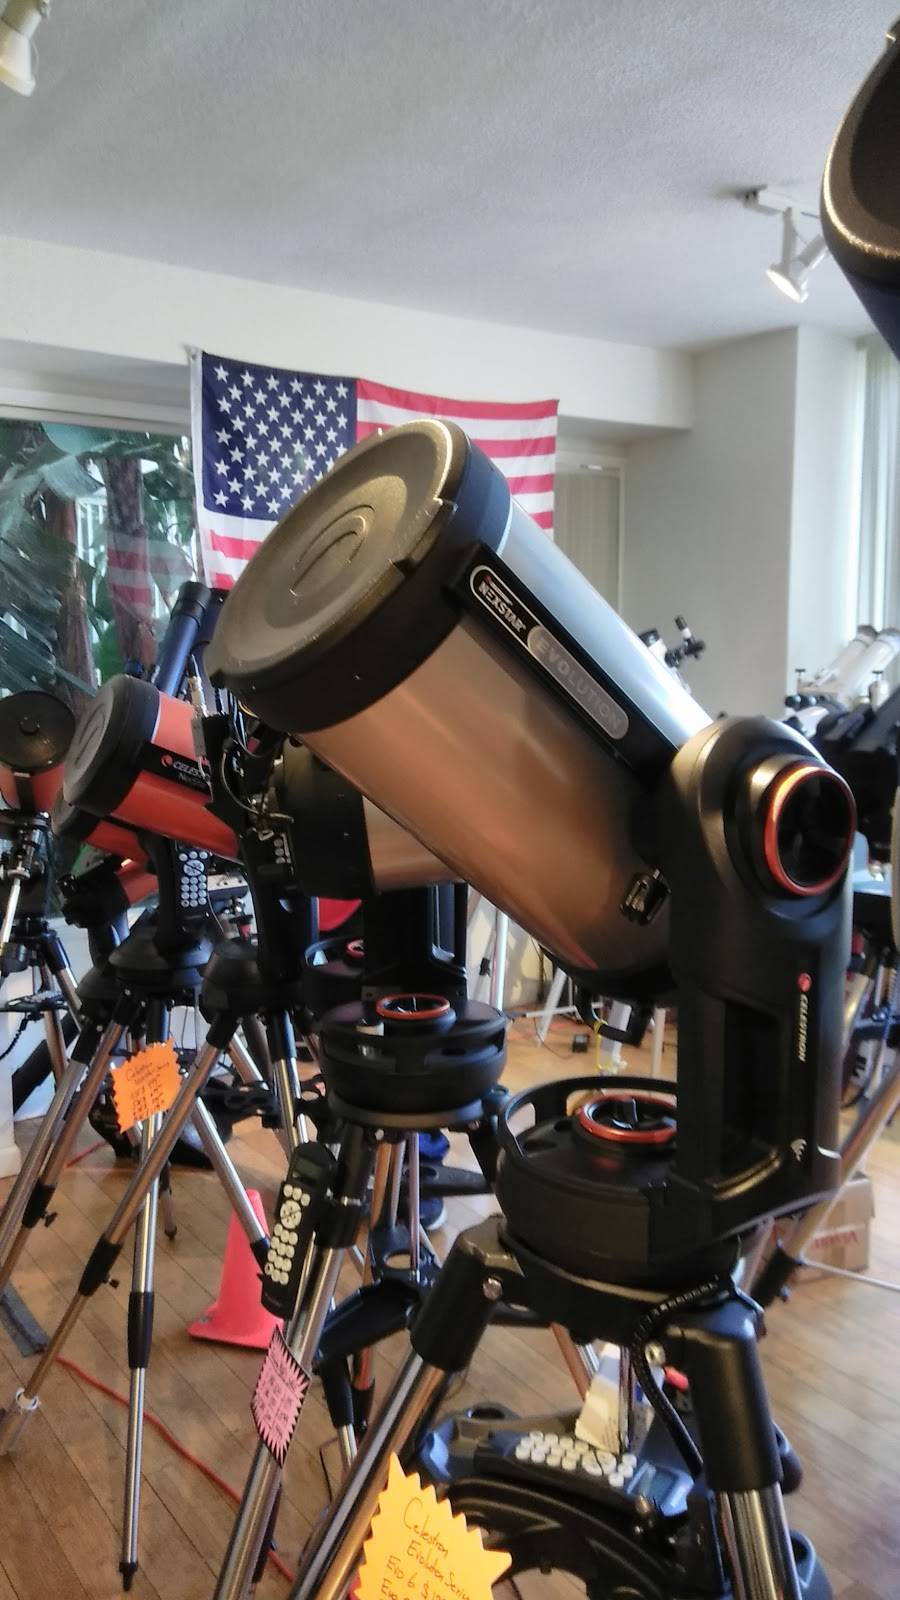 Orange County Telescope | 2216 N Main St, Santa Ana, CA 92706, USA | Phone: (888) 471-9991